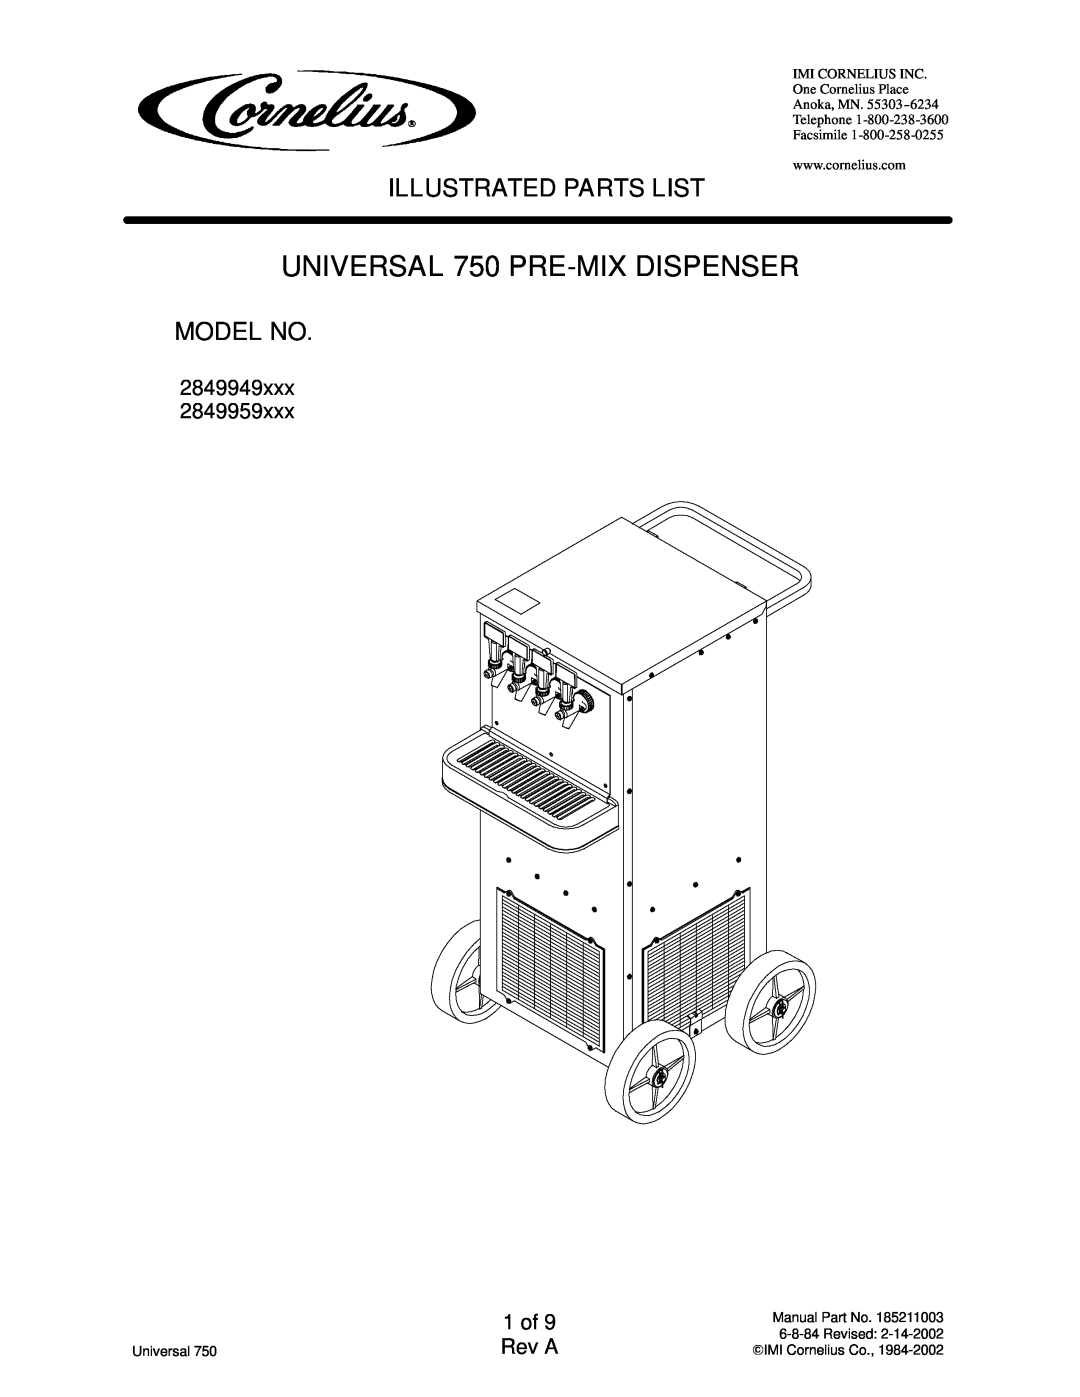 Cornelius 2849949xxx, 2849959xxx manual UNIVERSAL 750 PRE-MIXDISPENSER, Illustrated Parts List, Model No, 1 of 9 Rev A 